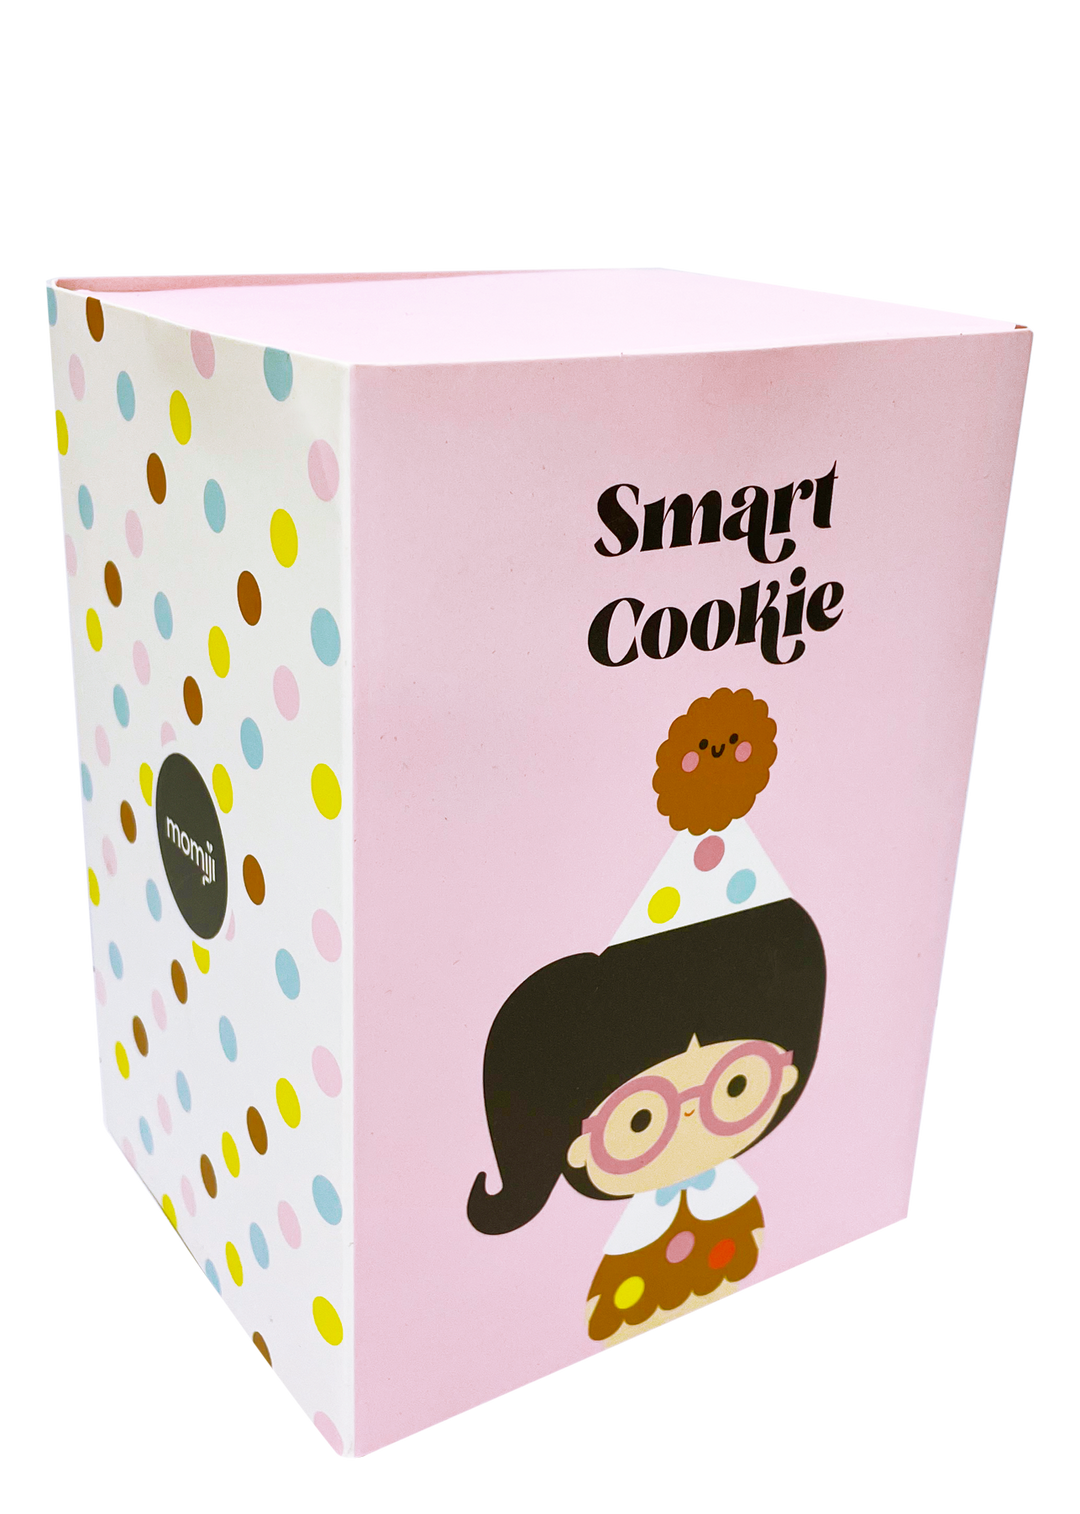 Smart Cookie by Momiji